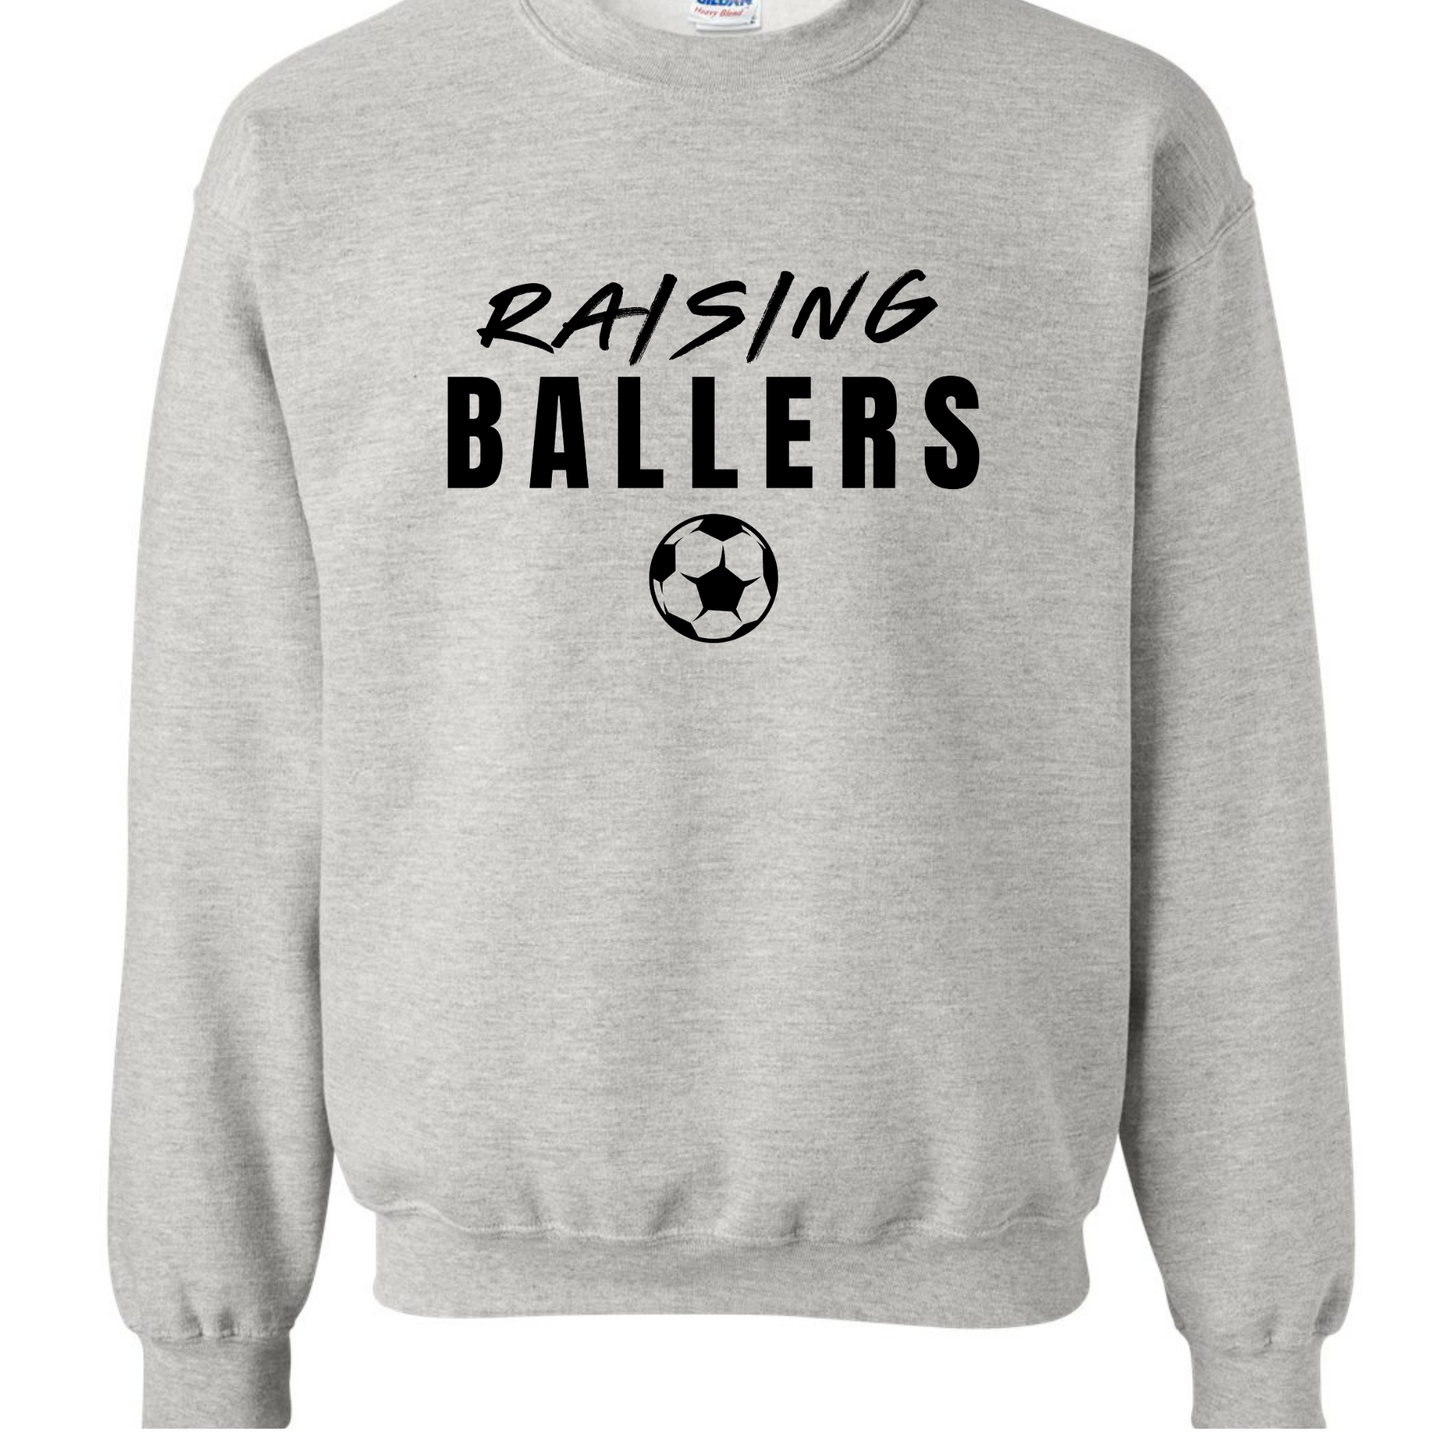 Raising Ballers Crewneck Sweatshirt (Soccer)